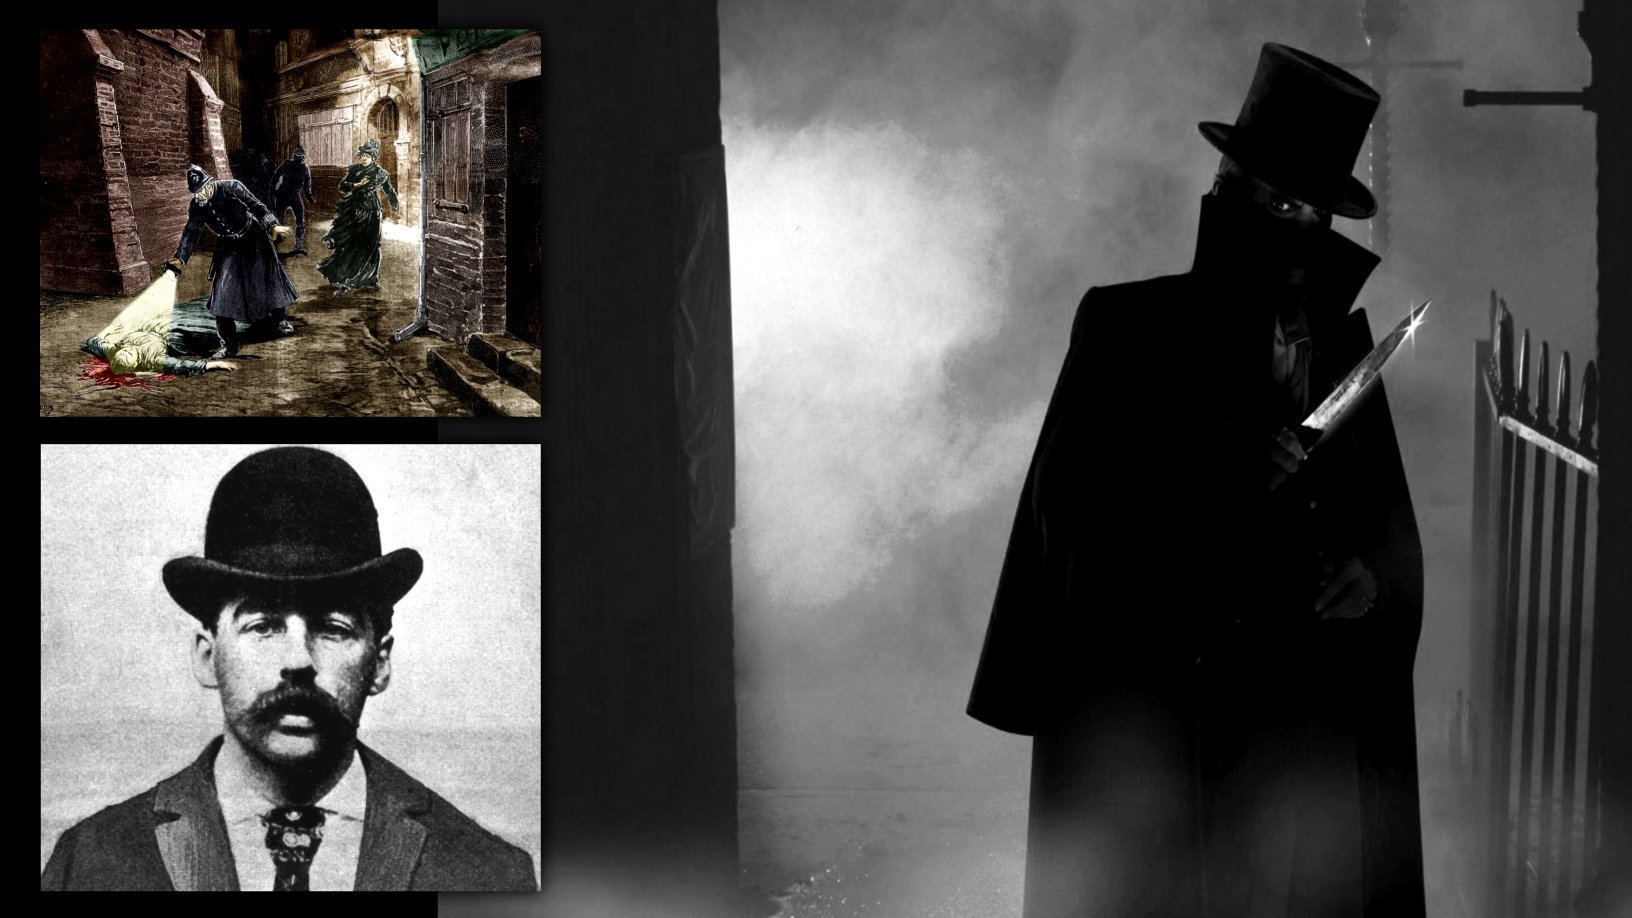 Wien war den Jack the Ripper? 1